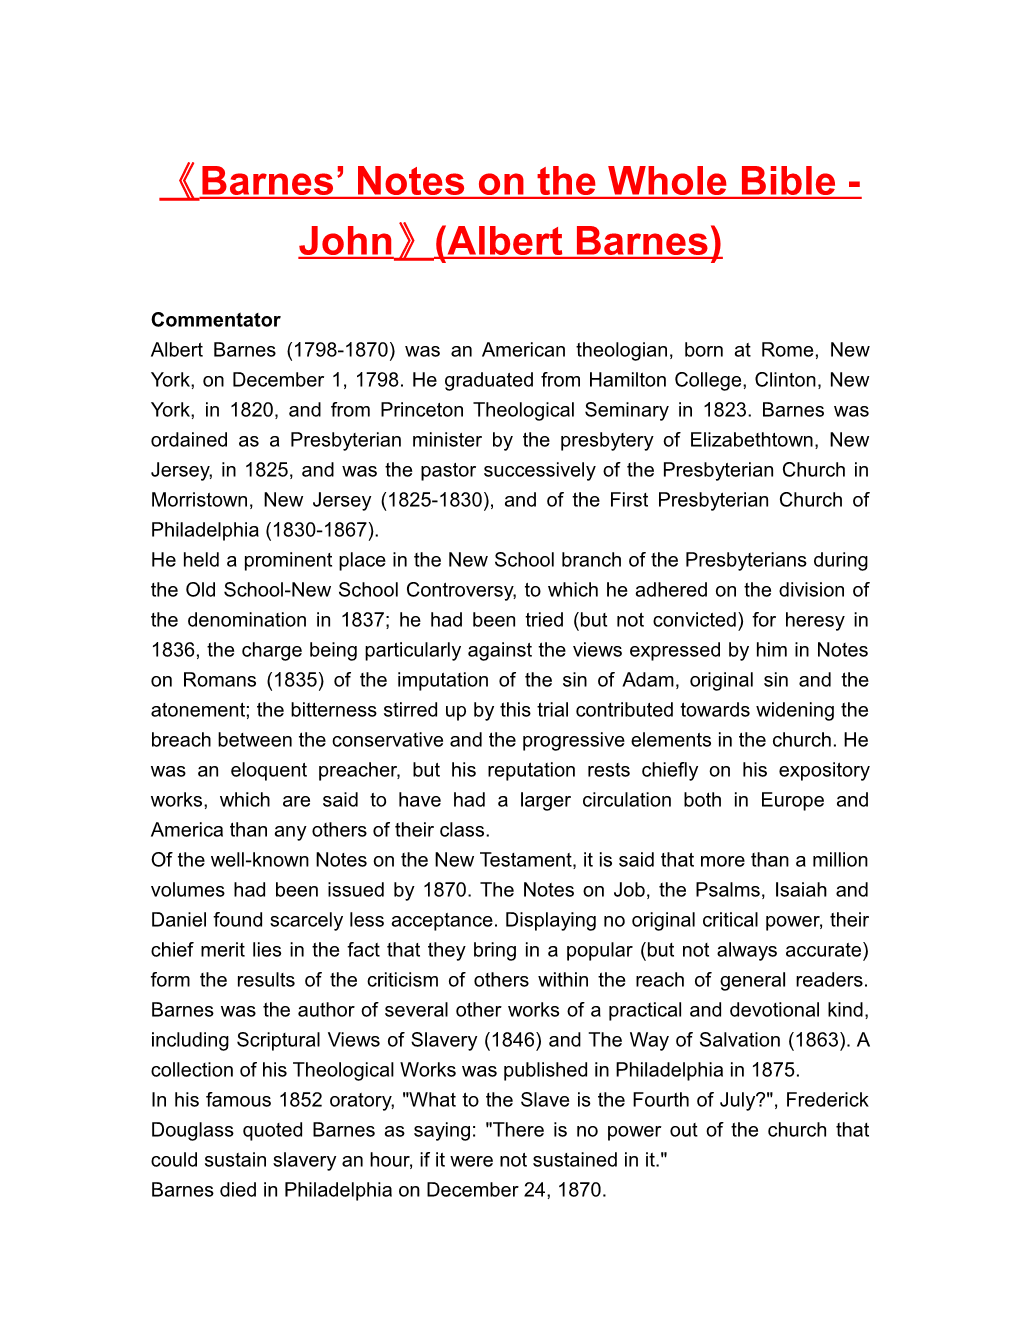 Barnes Notes on the Whole Bible - John (Albert Barnes)